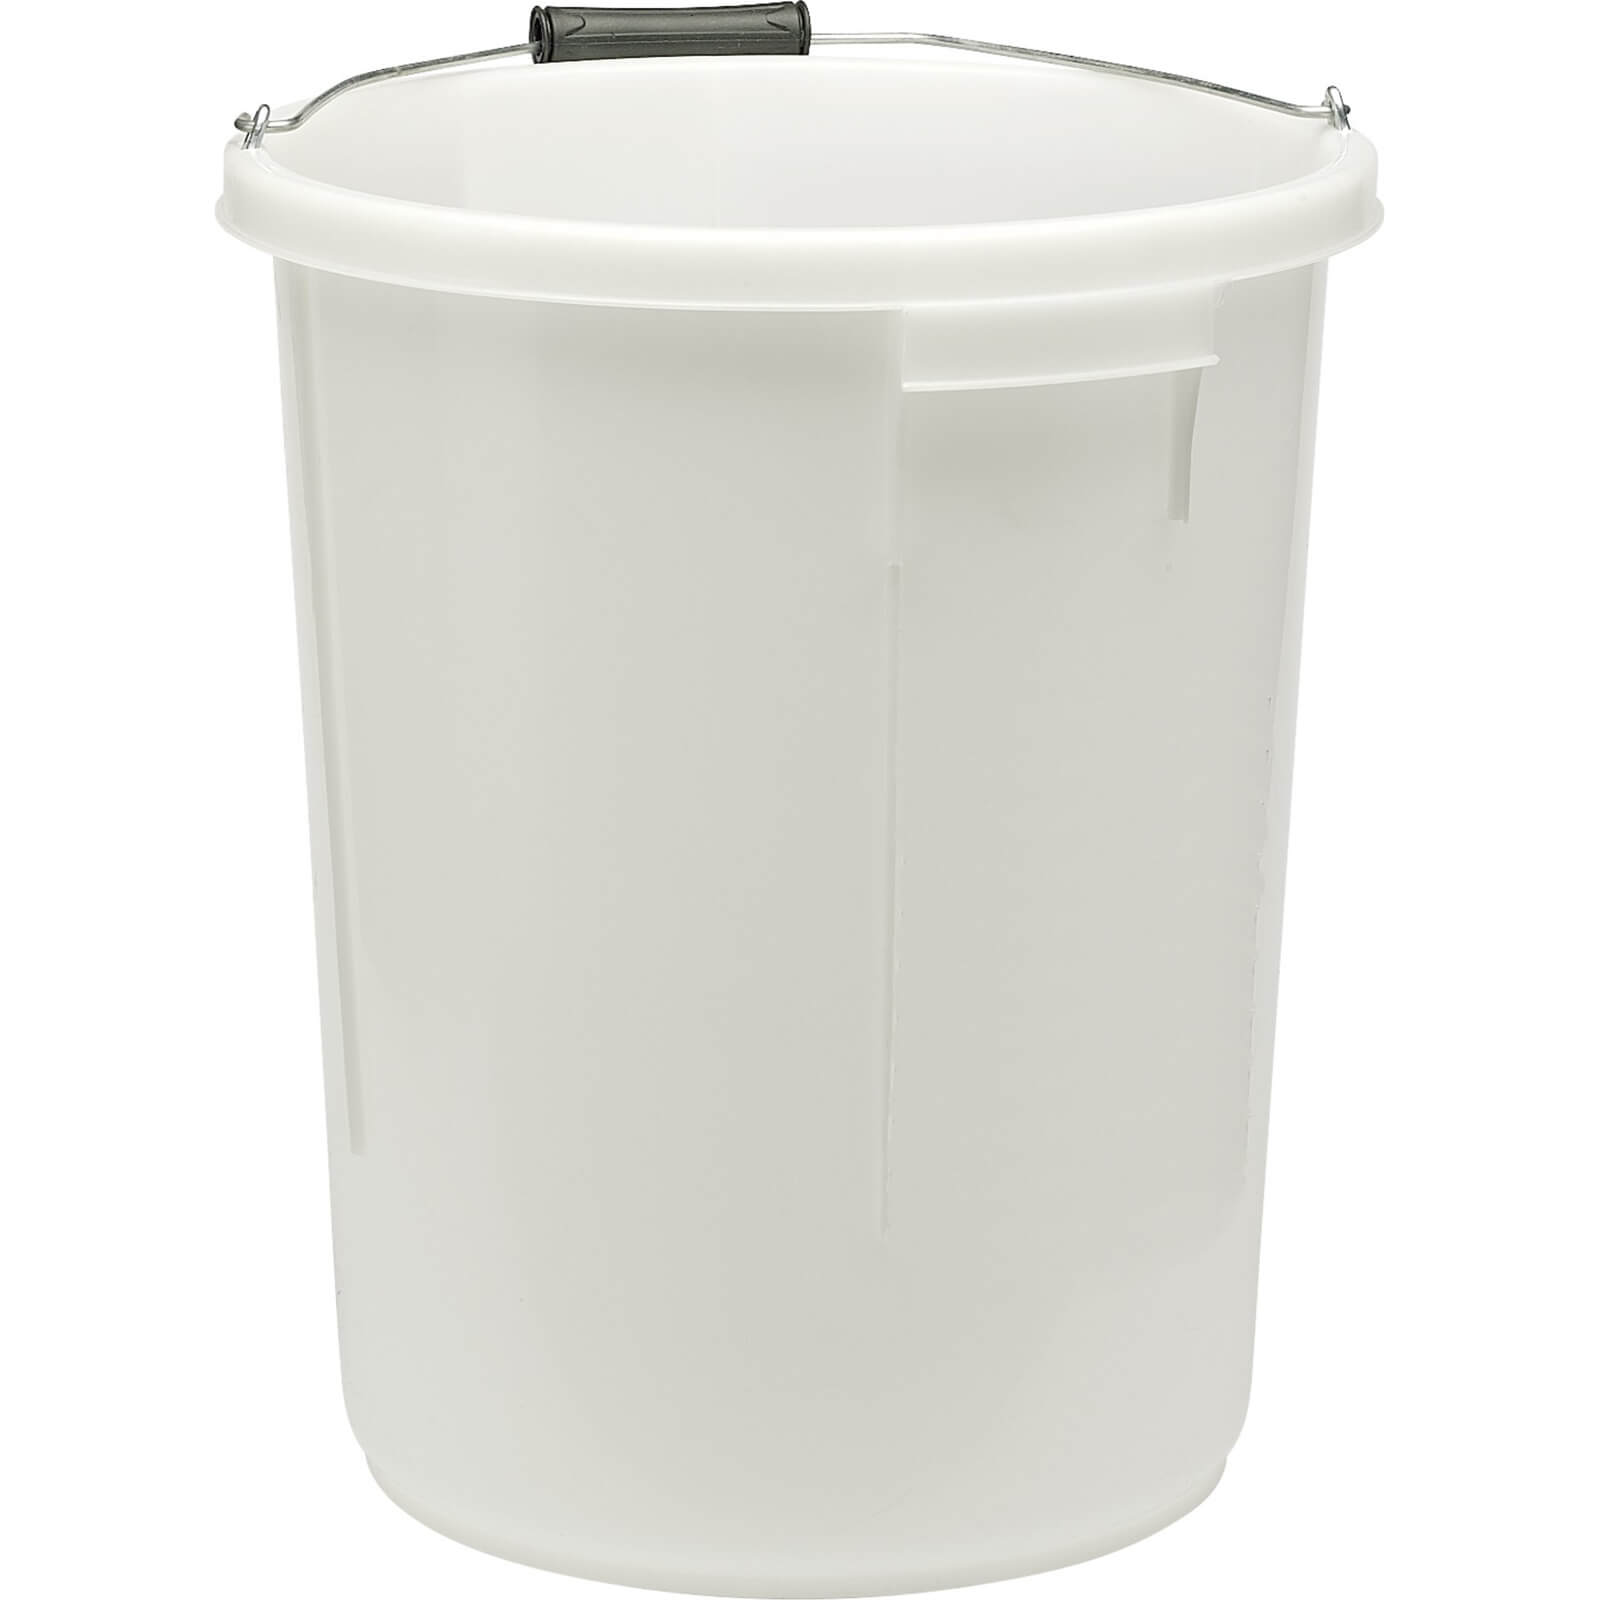 Image of Draper Plasterers Mixing Bucket 25l White